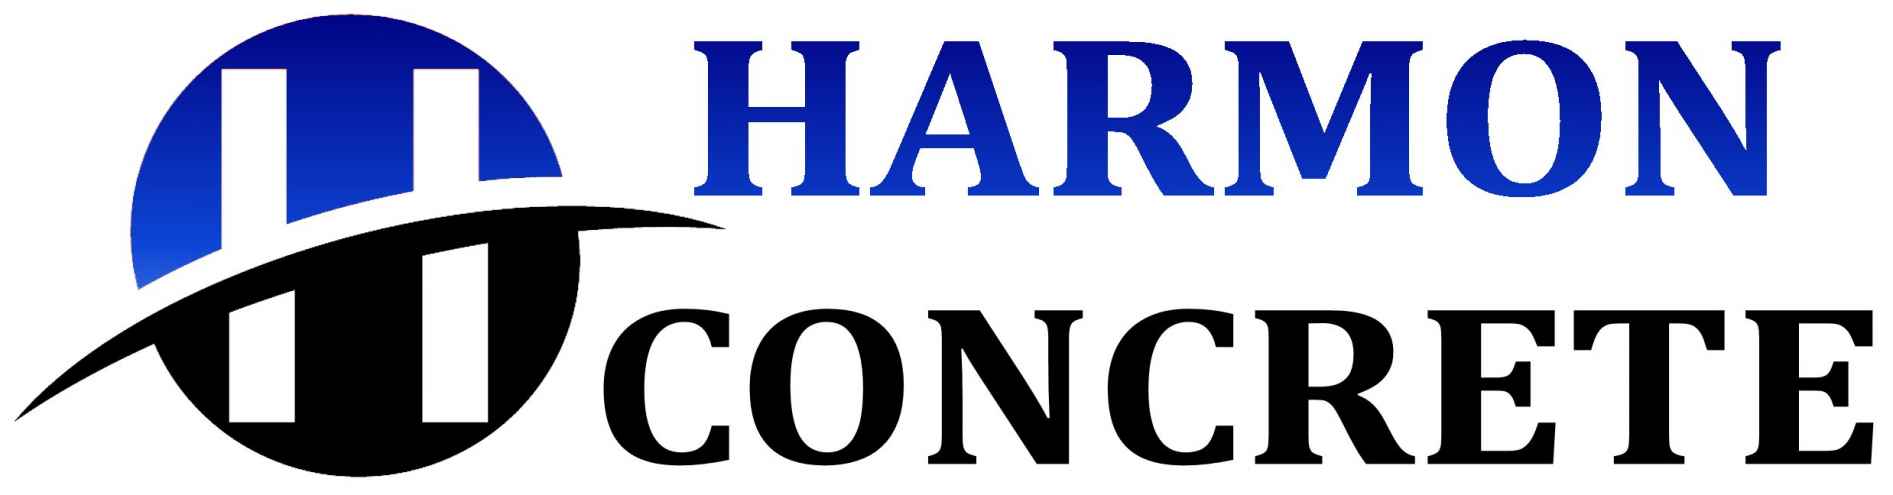 harmonconcrete Logo